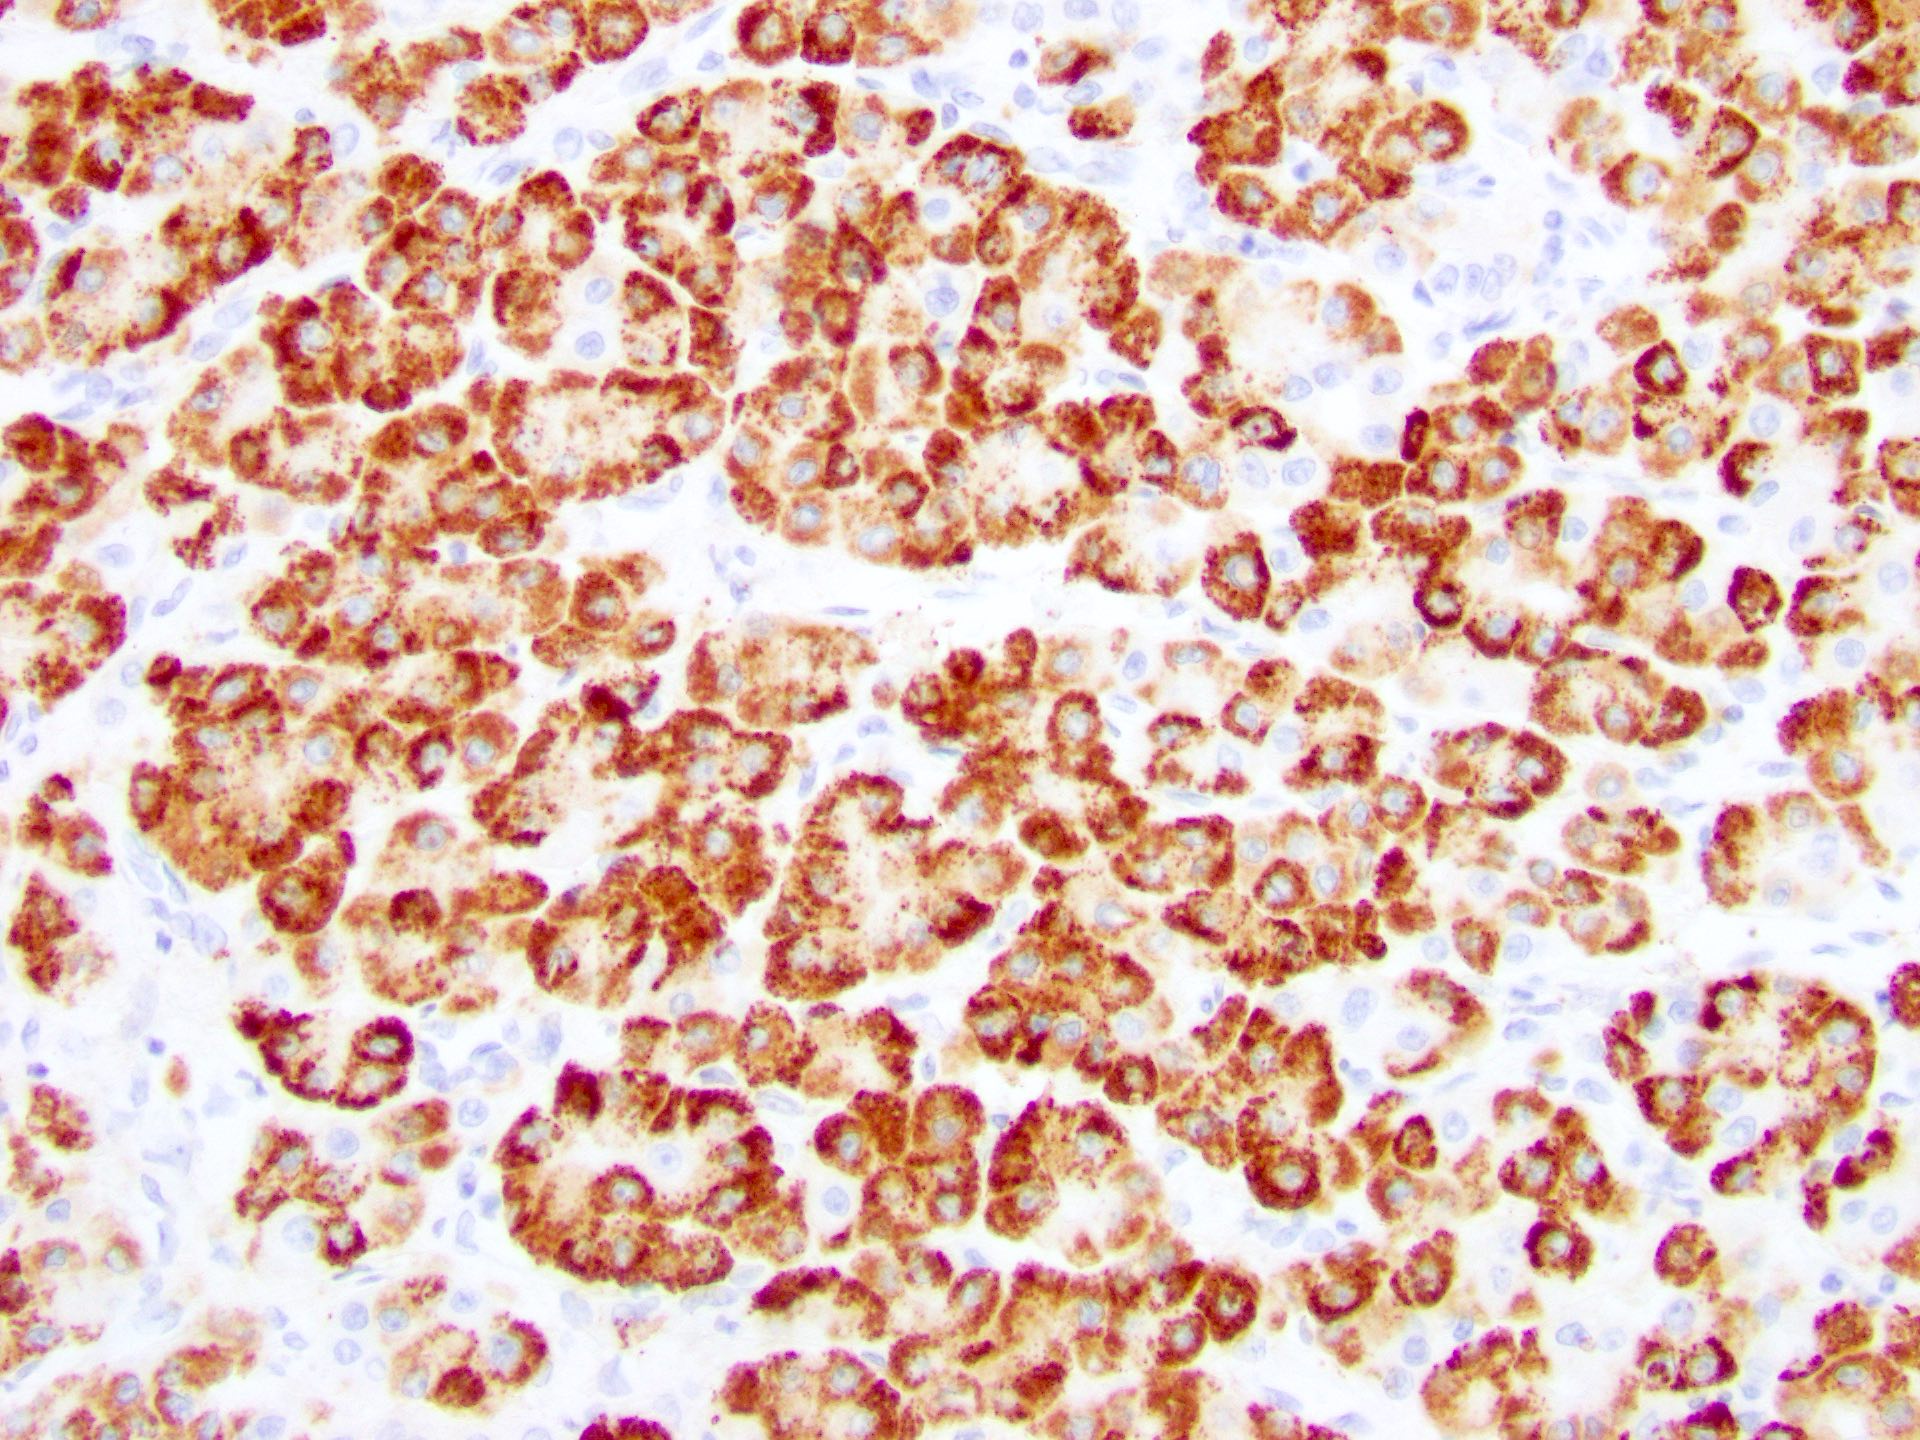 Hepatocyte Paraffin 1 (HepPar1)